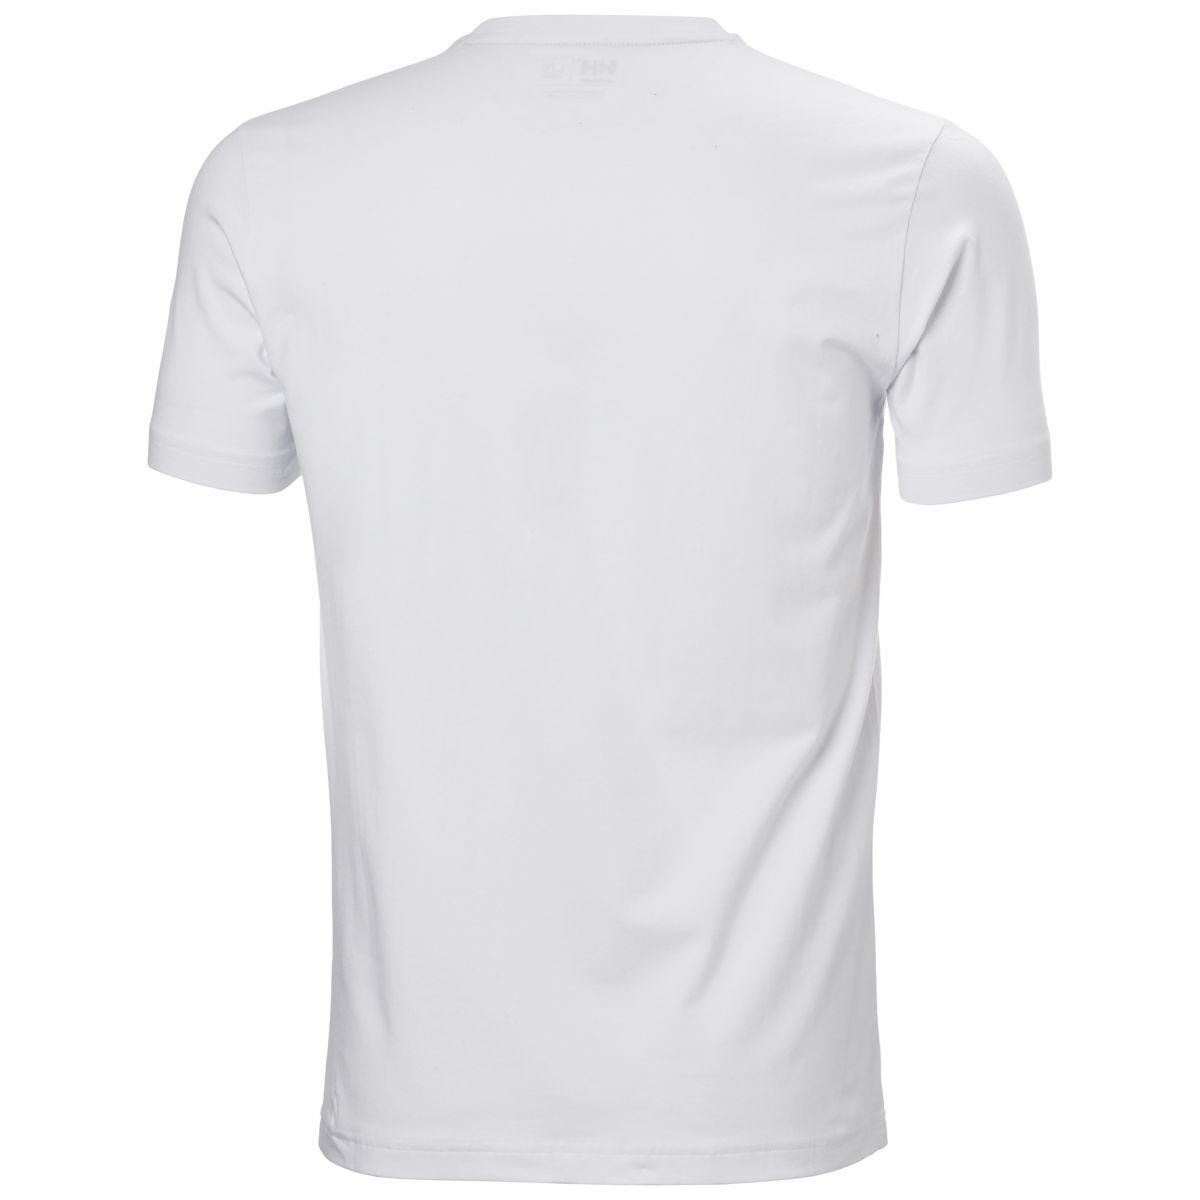 Tee-shirt Kensington Blanc - Helly Hansen - Taille M 1